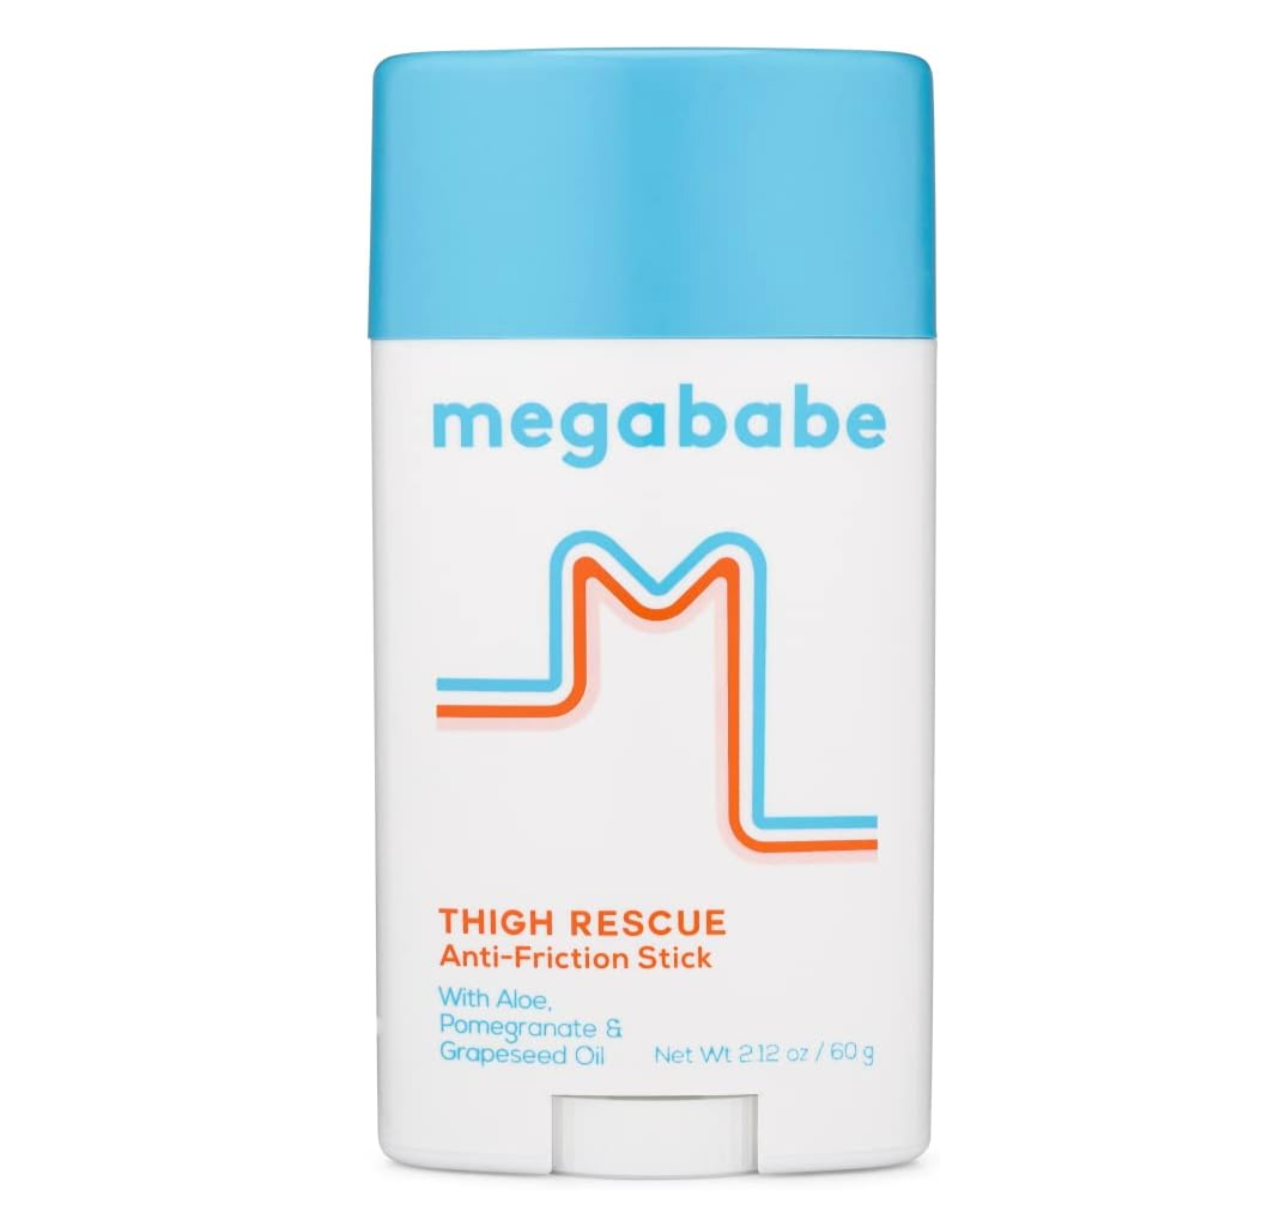 MegaBabe Tight Rescue